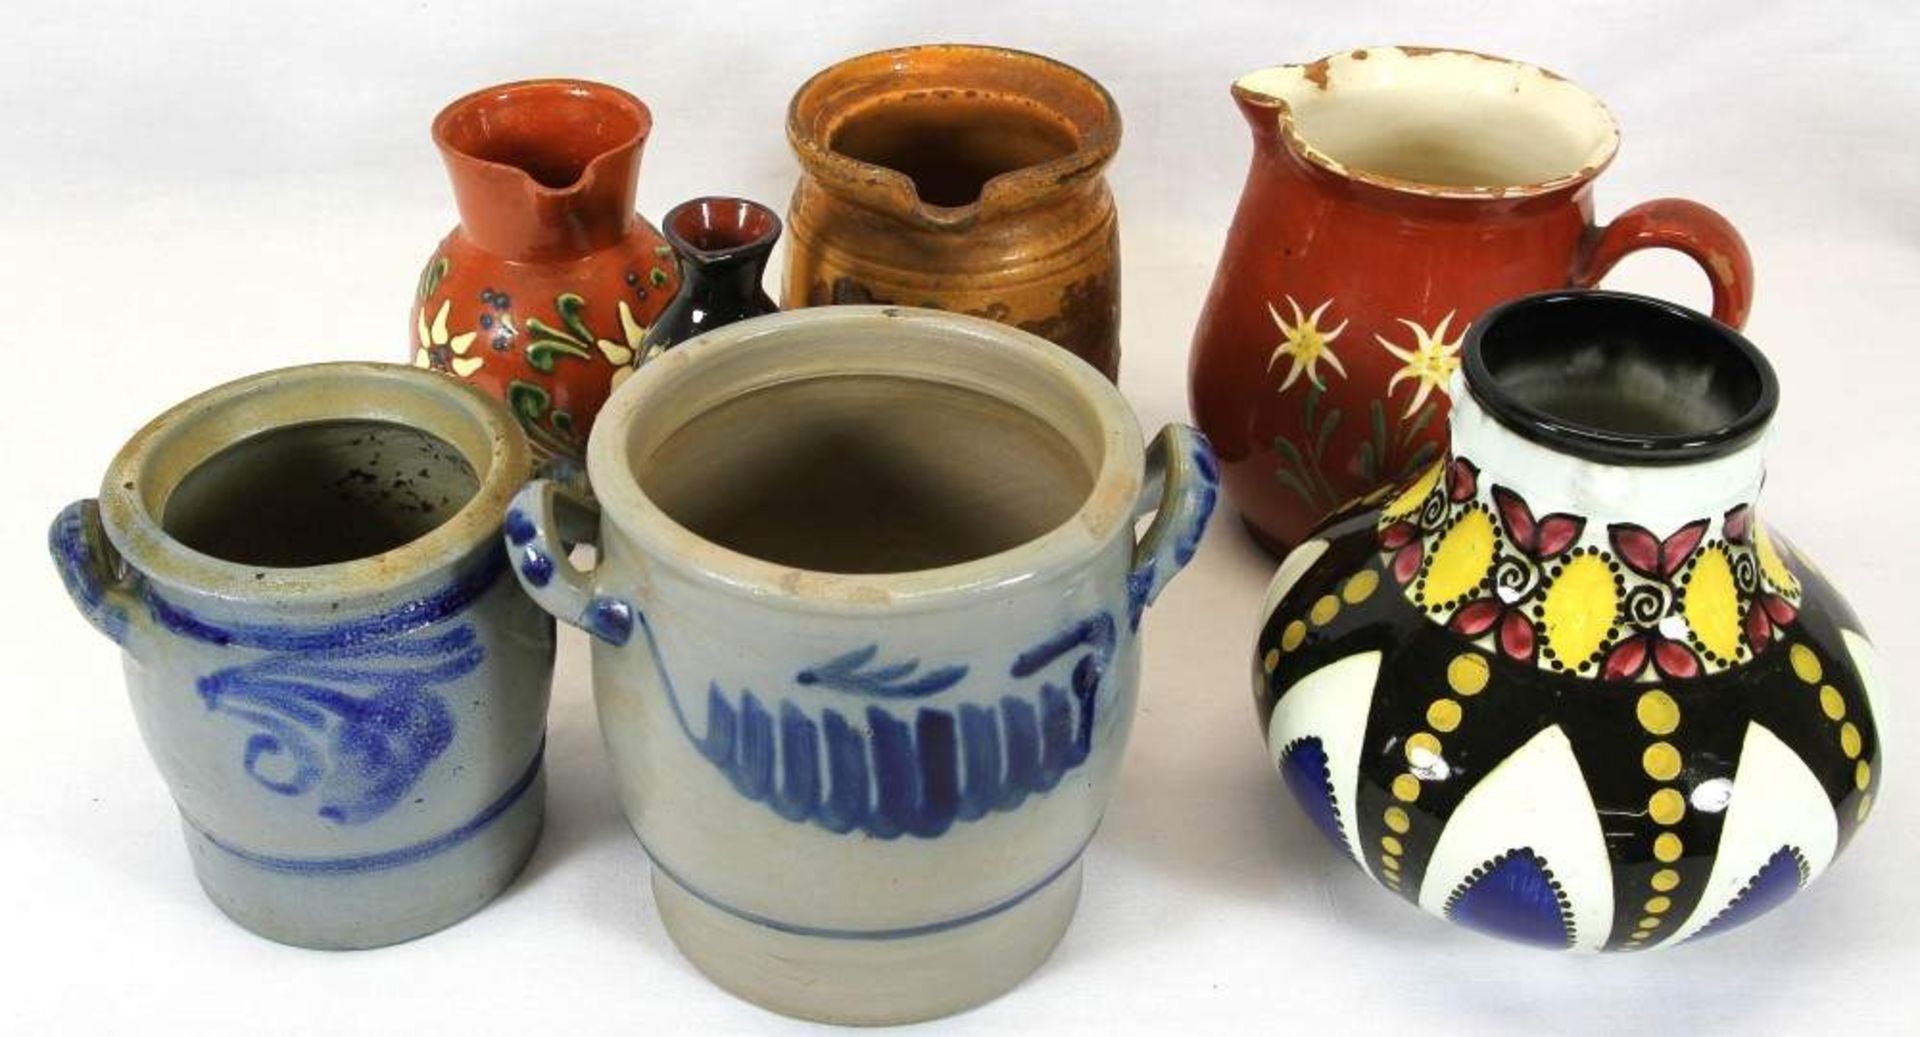 Konvolut Töpfe und Vasen um 1900 Keramik teils mit Salzglasur, teils mit polychromer Glasur. - Image 2 of 2